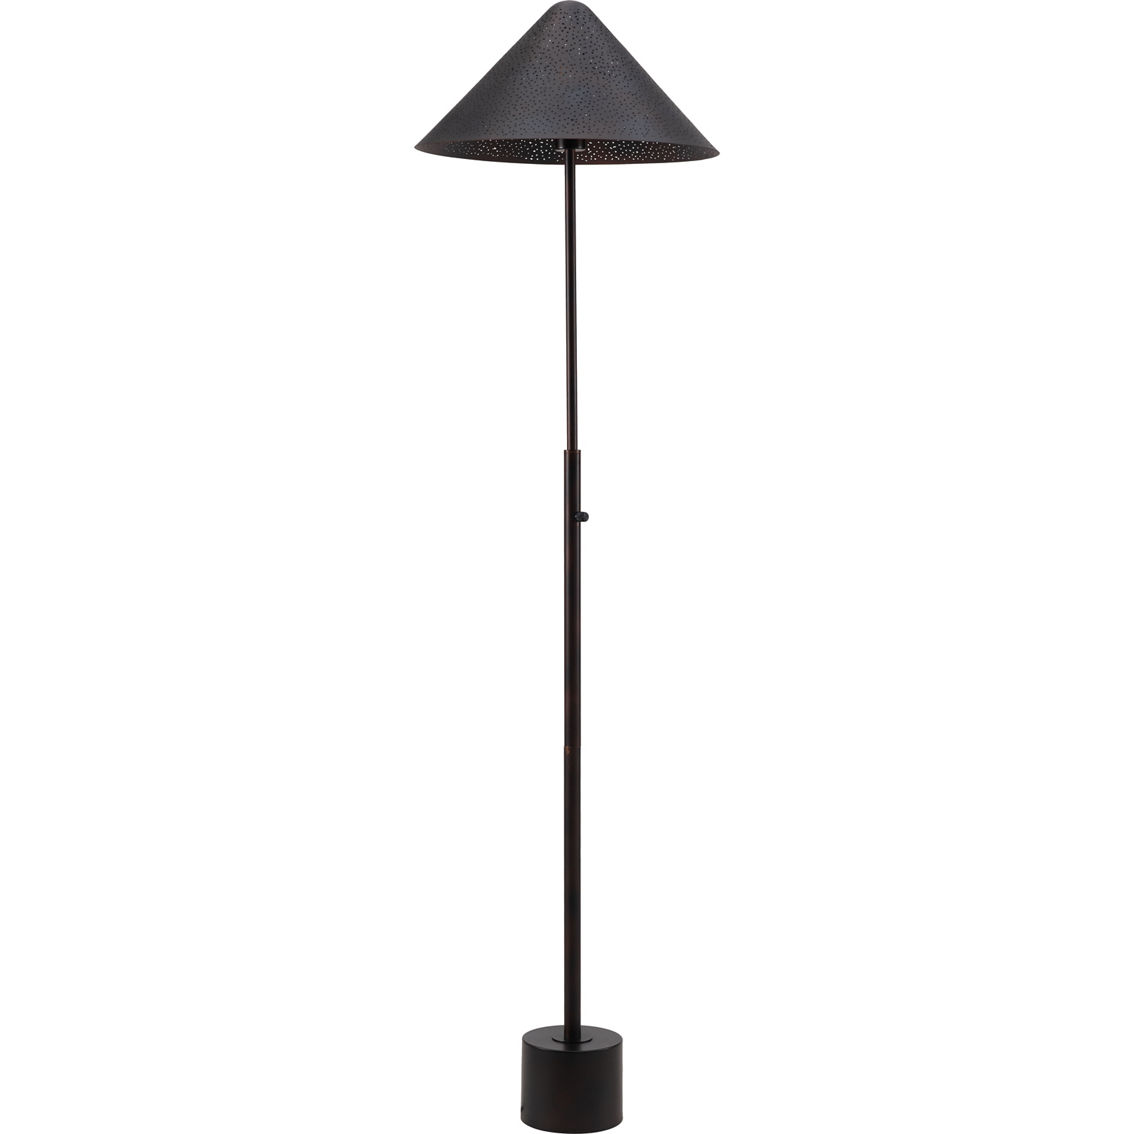 Zuo Modern Cardo Floor Lamp, Bronze - Image 2 of 8